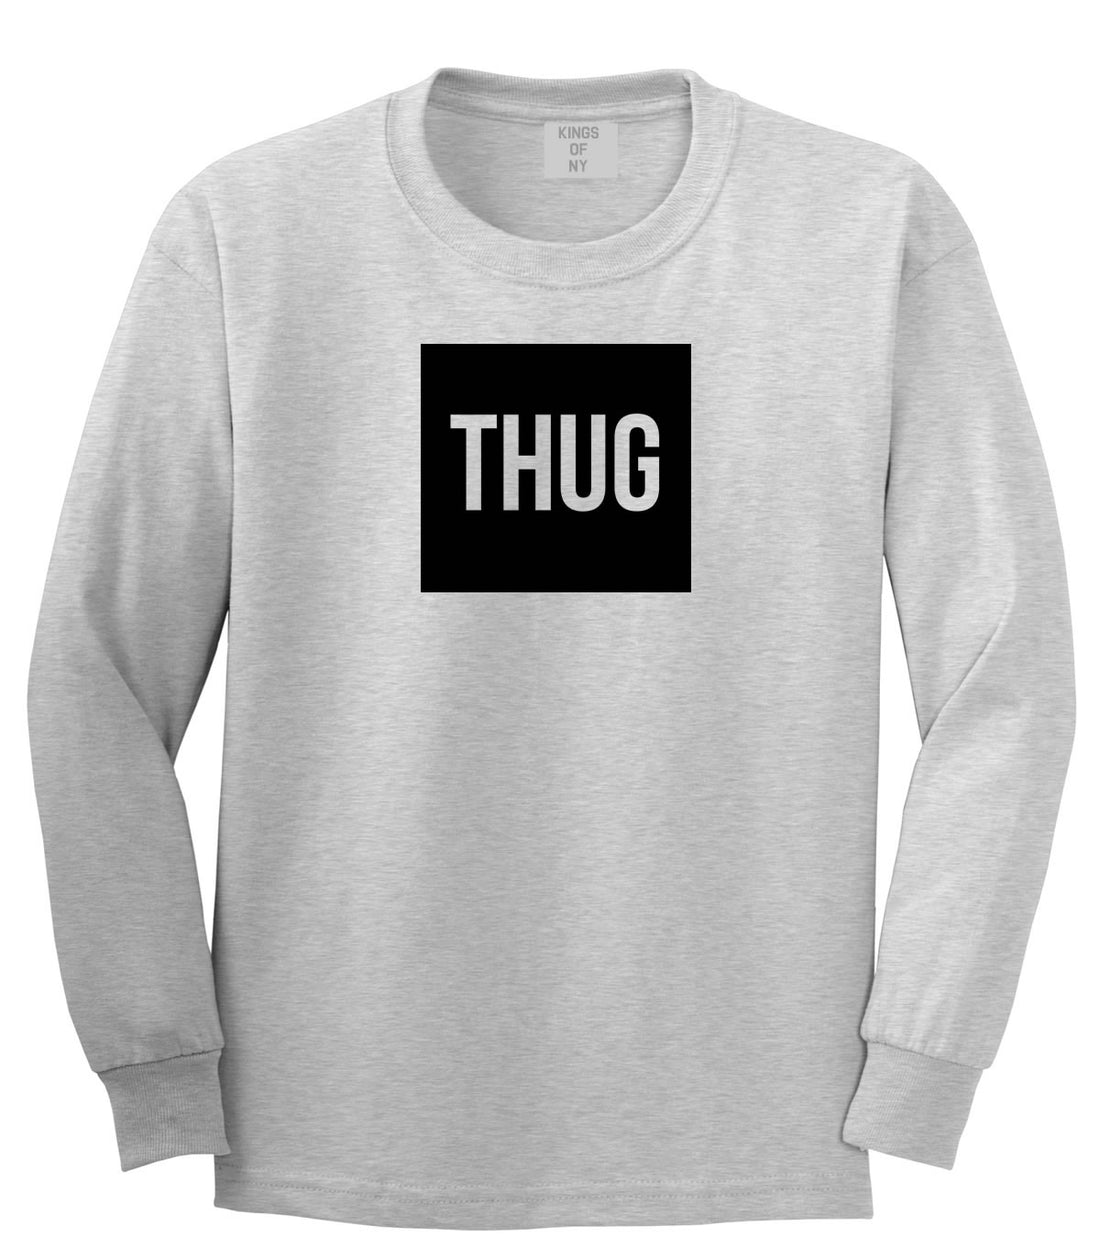 Thug Gangsta Box Logo Long Sleeve T-Shirt in Grey by Kings Of NY